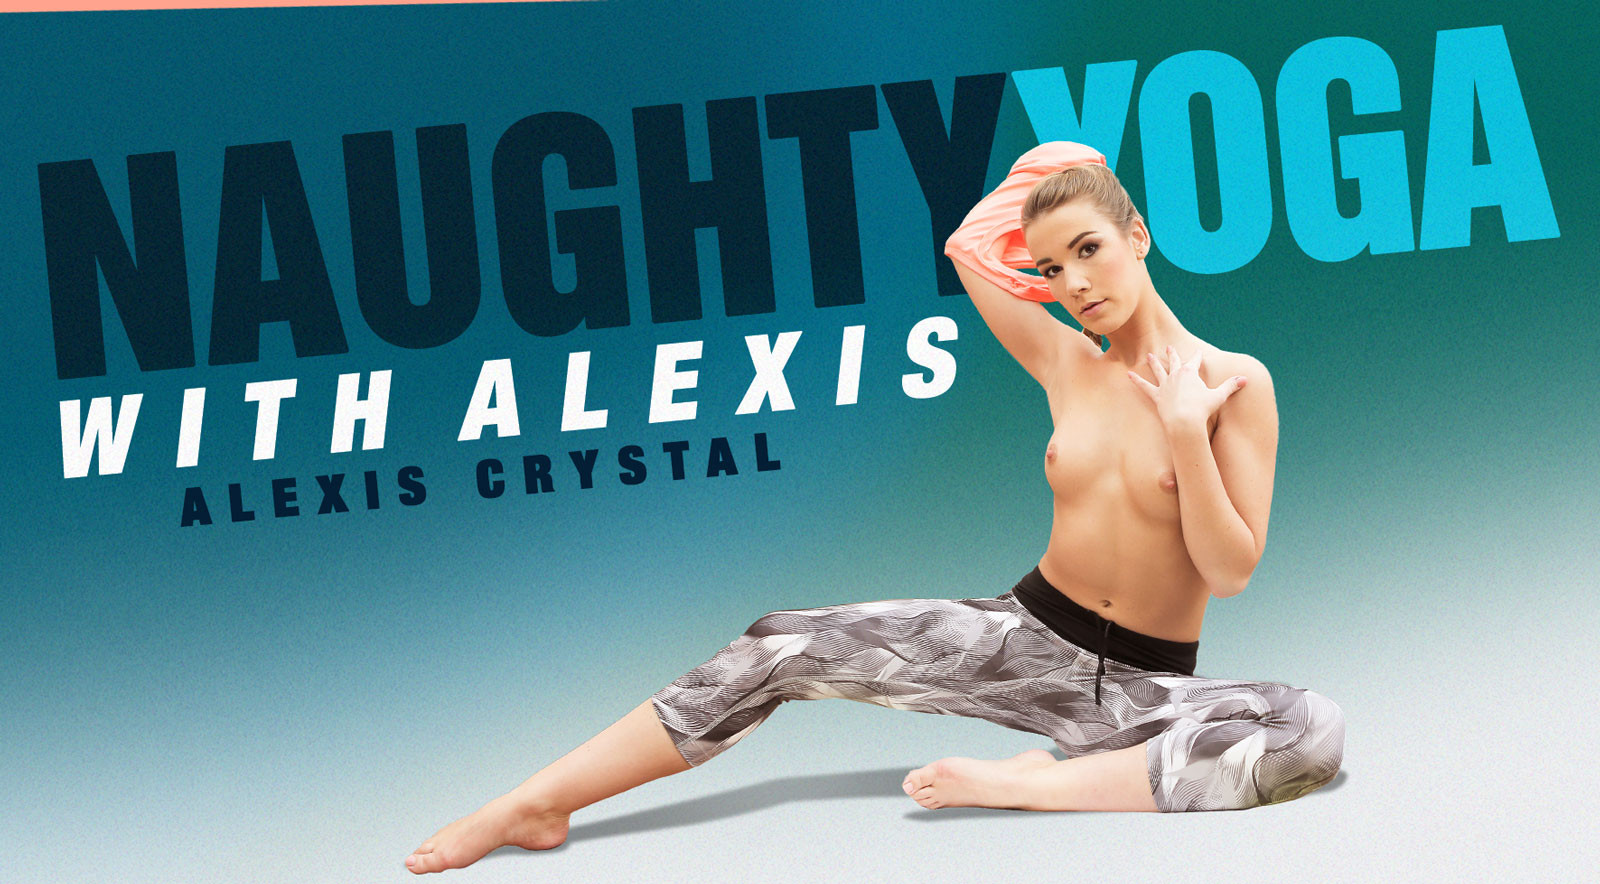 Naughty Yoga With Alexis: Alexis Crystal Slideshow